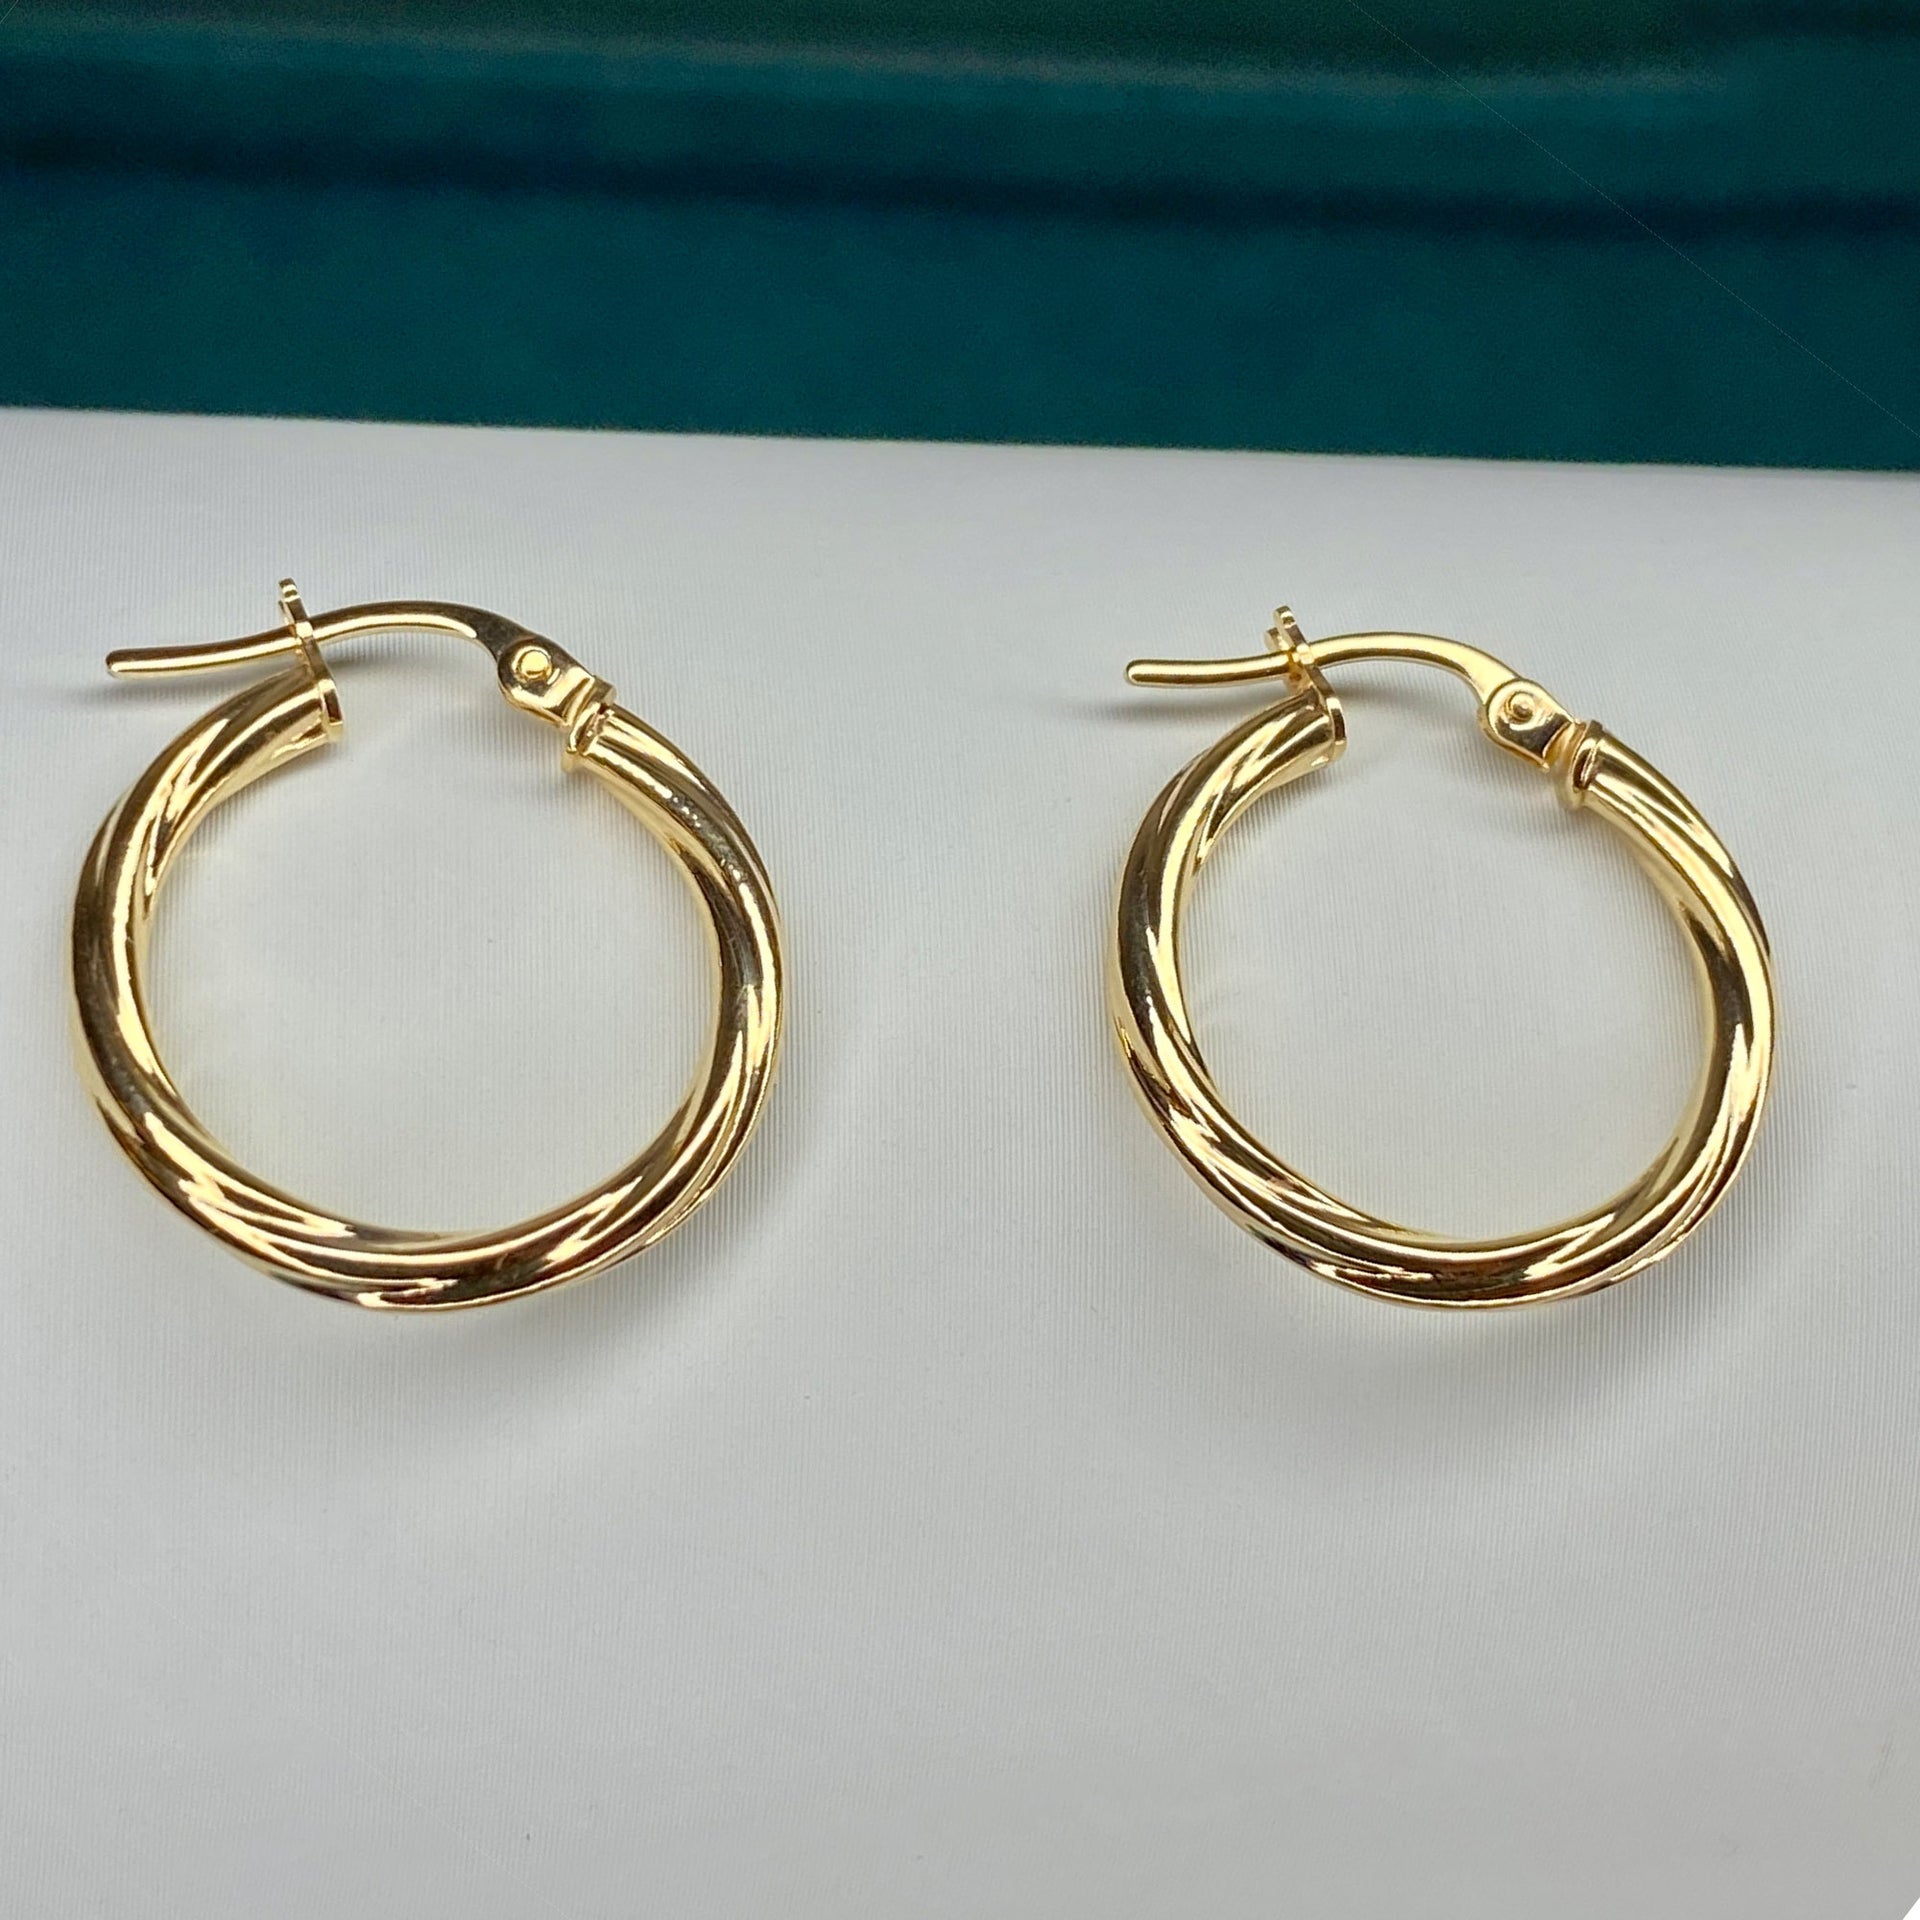 9ct solid Gold Twisted Hoop Earrings 19mm